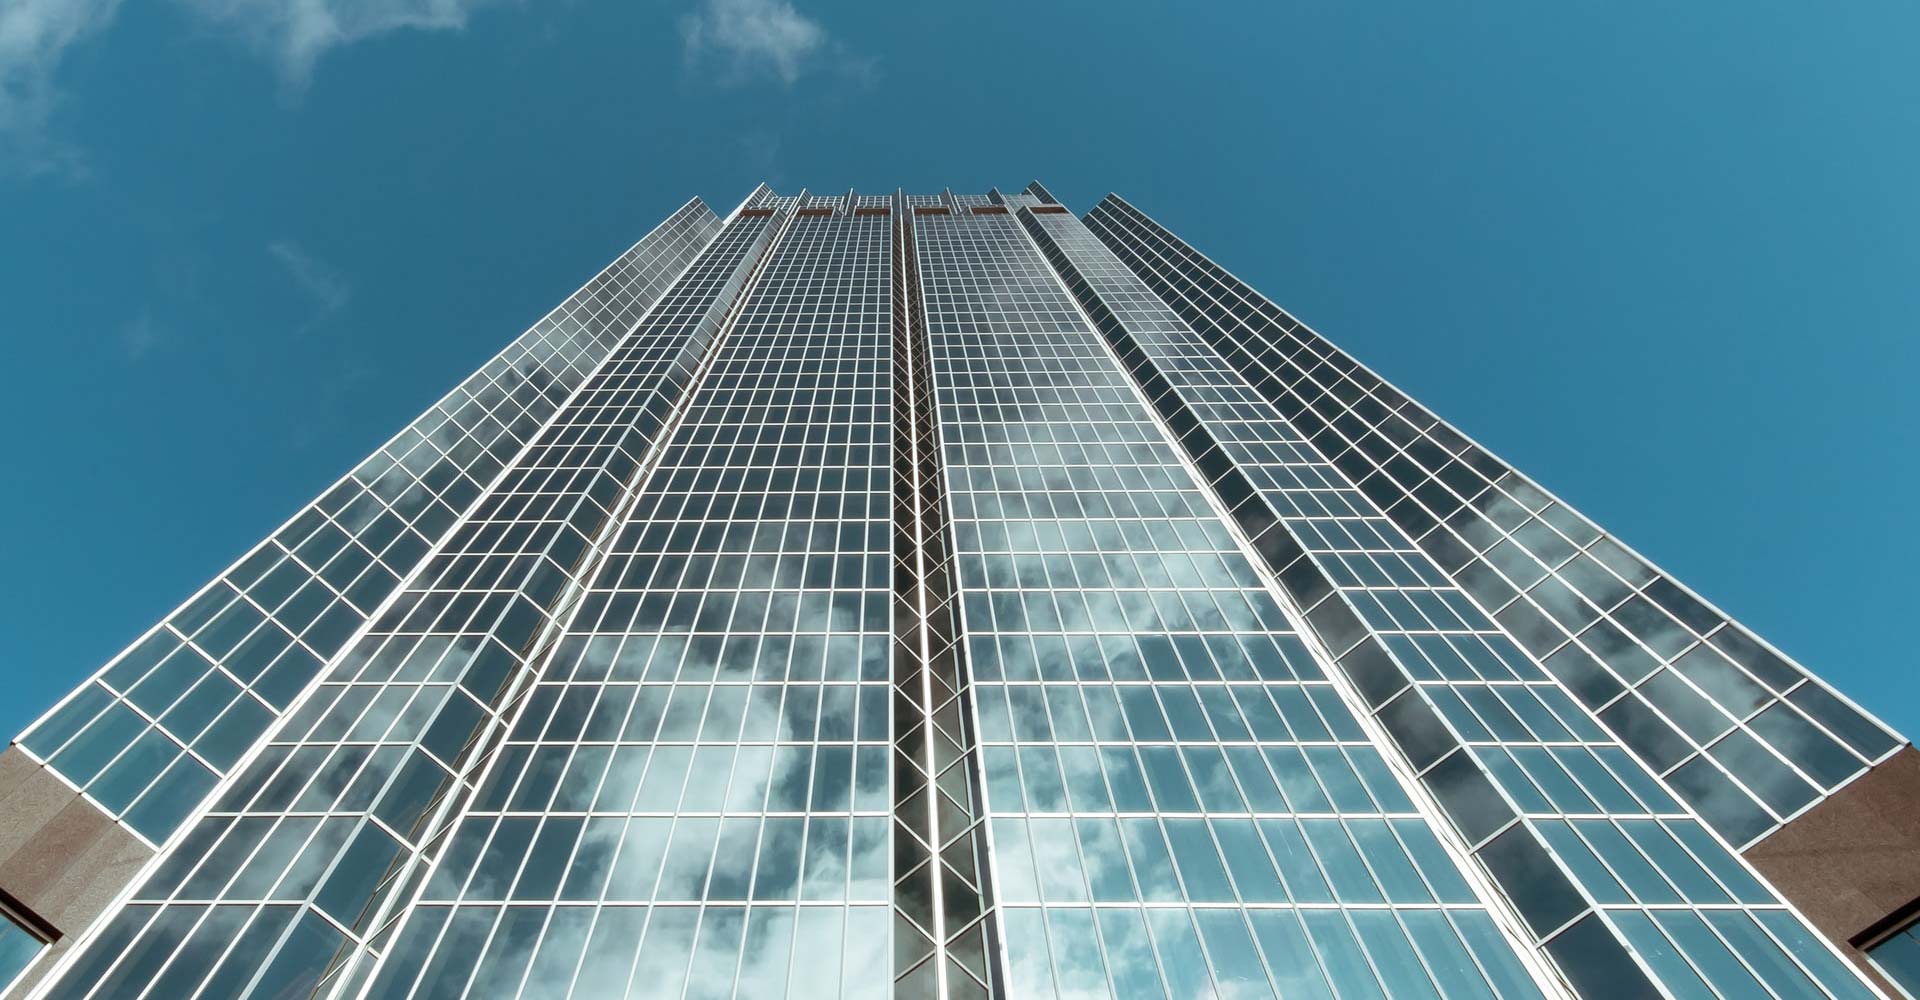 A London skyscraper against a clear blue sky